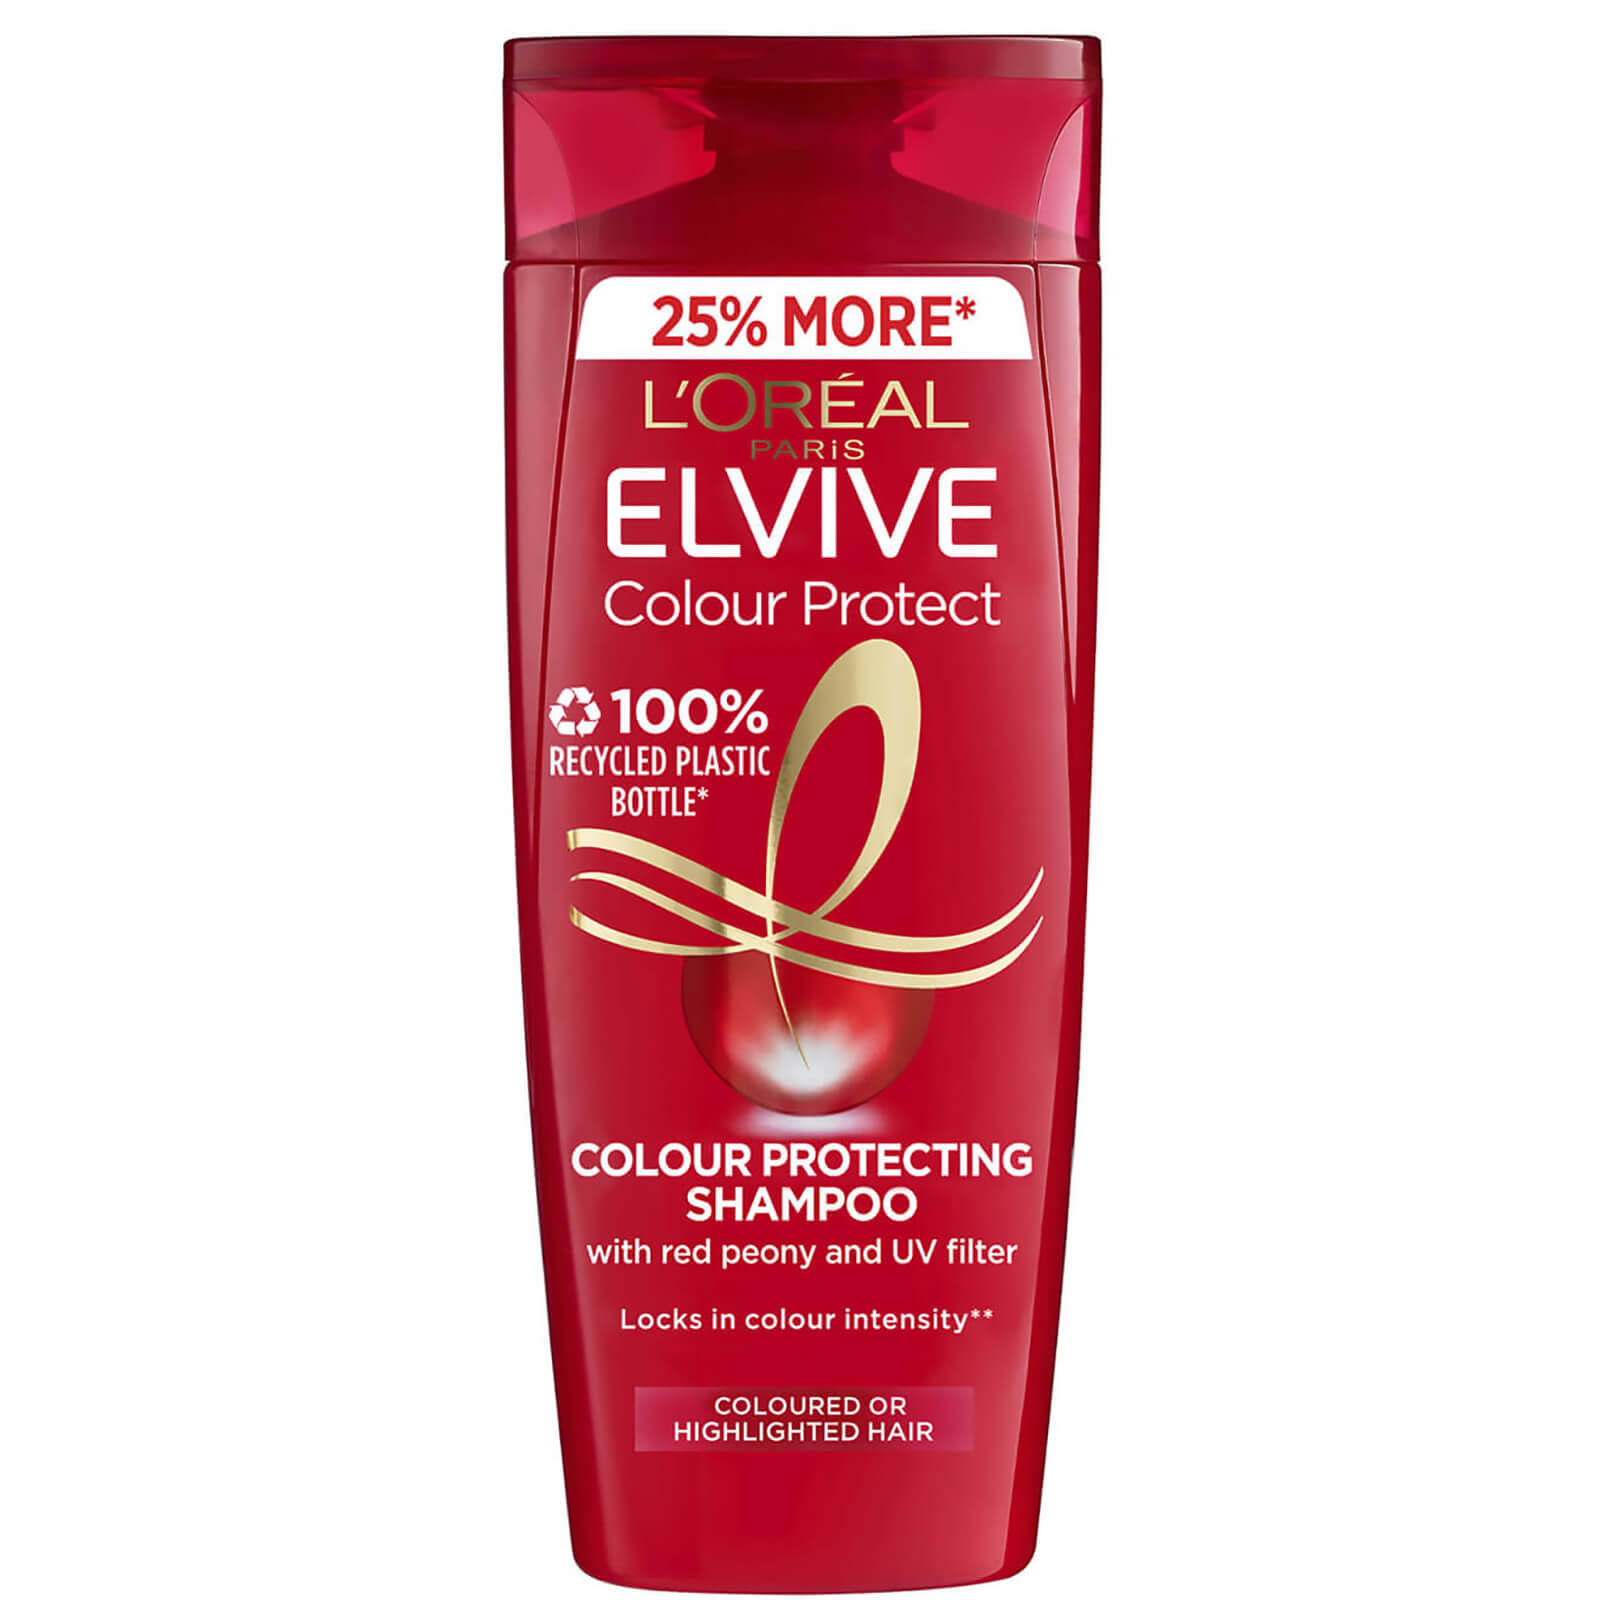 L'Oreal Elvive Colour Protect Coloured Hair Shampoo 500ml